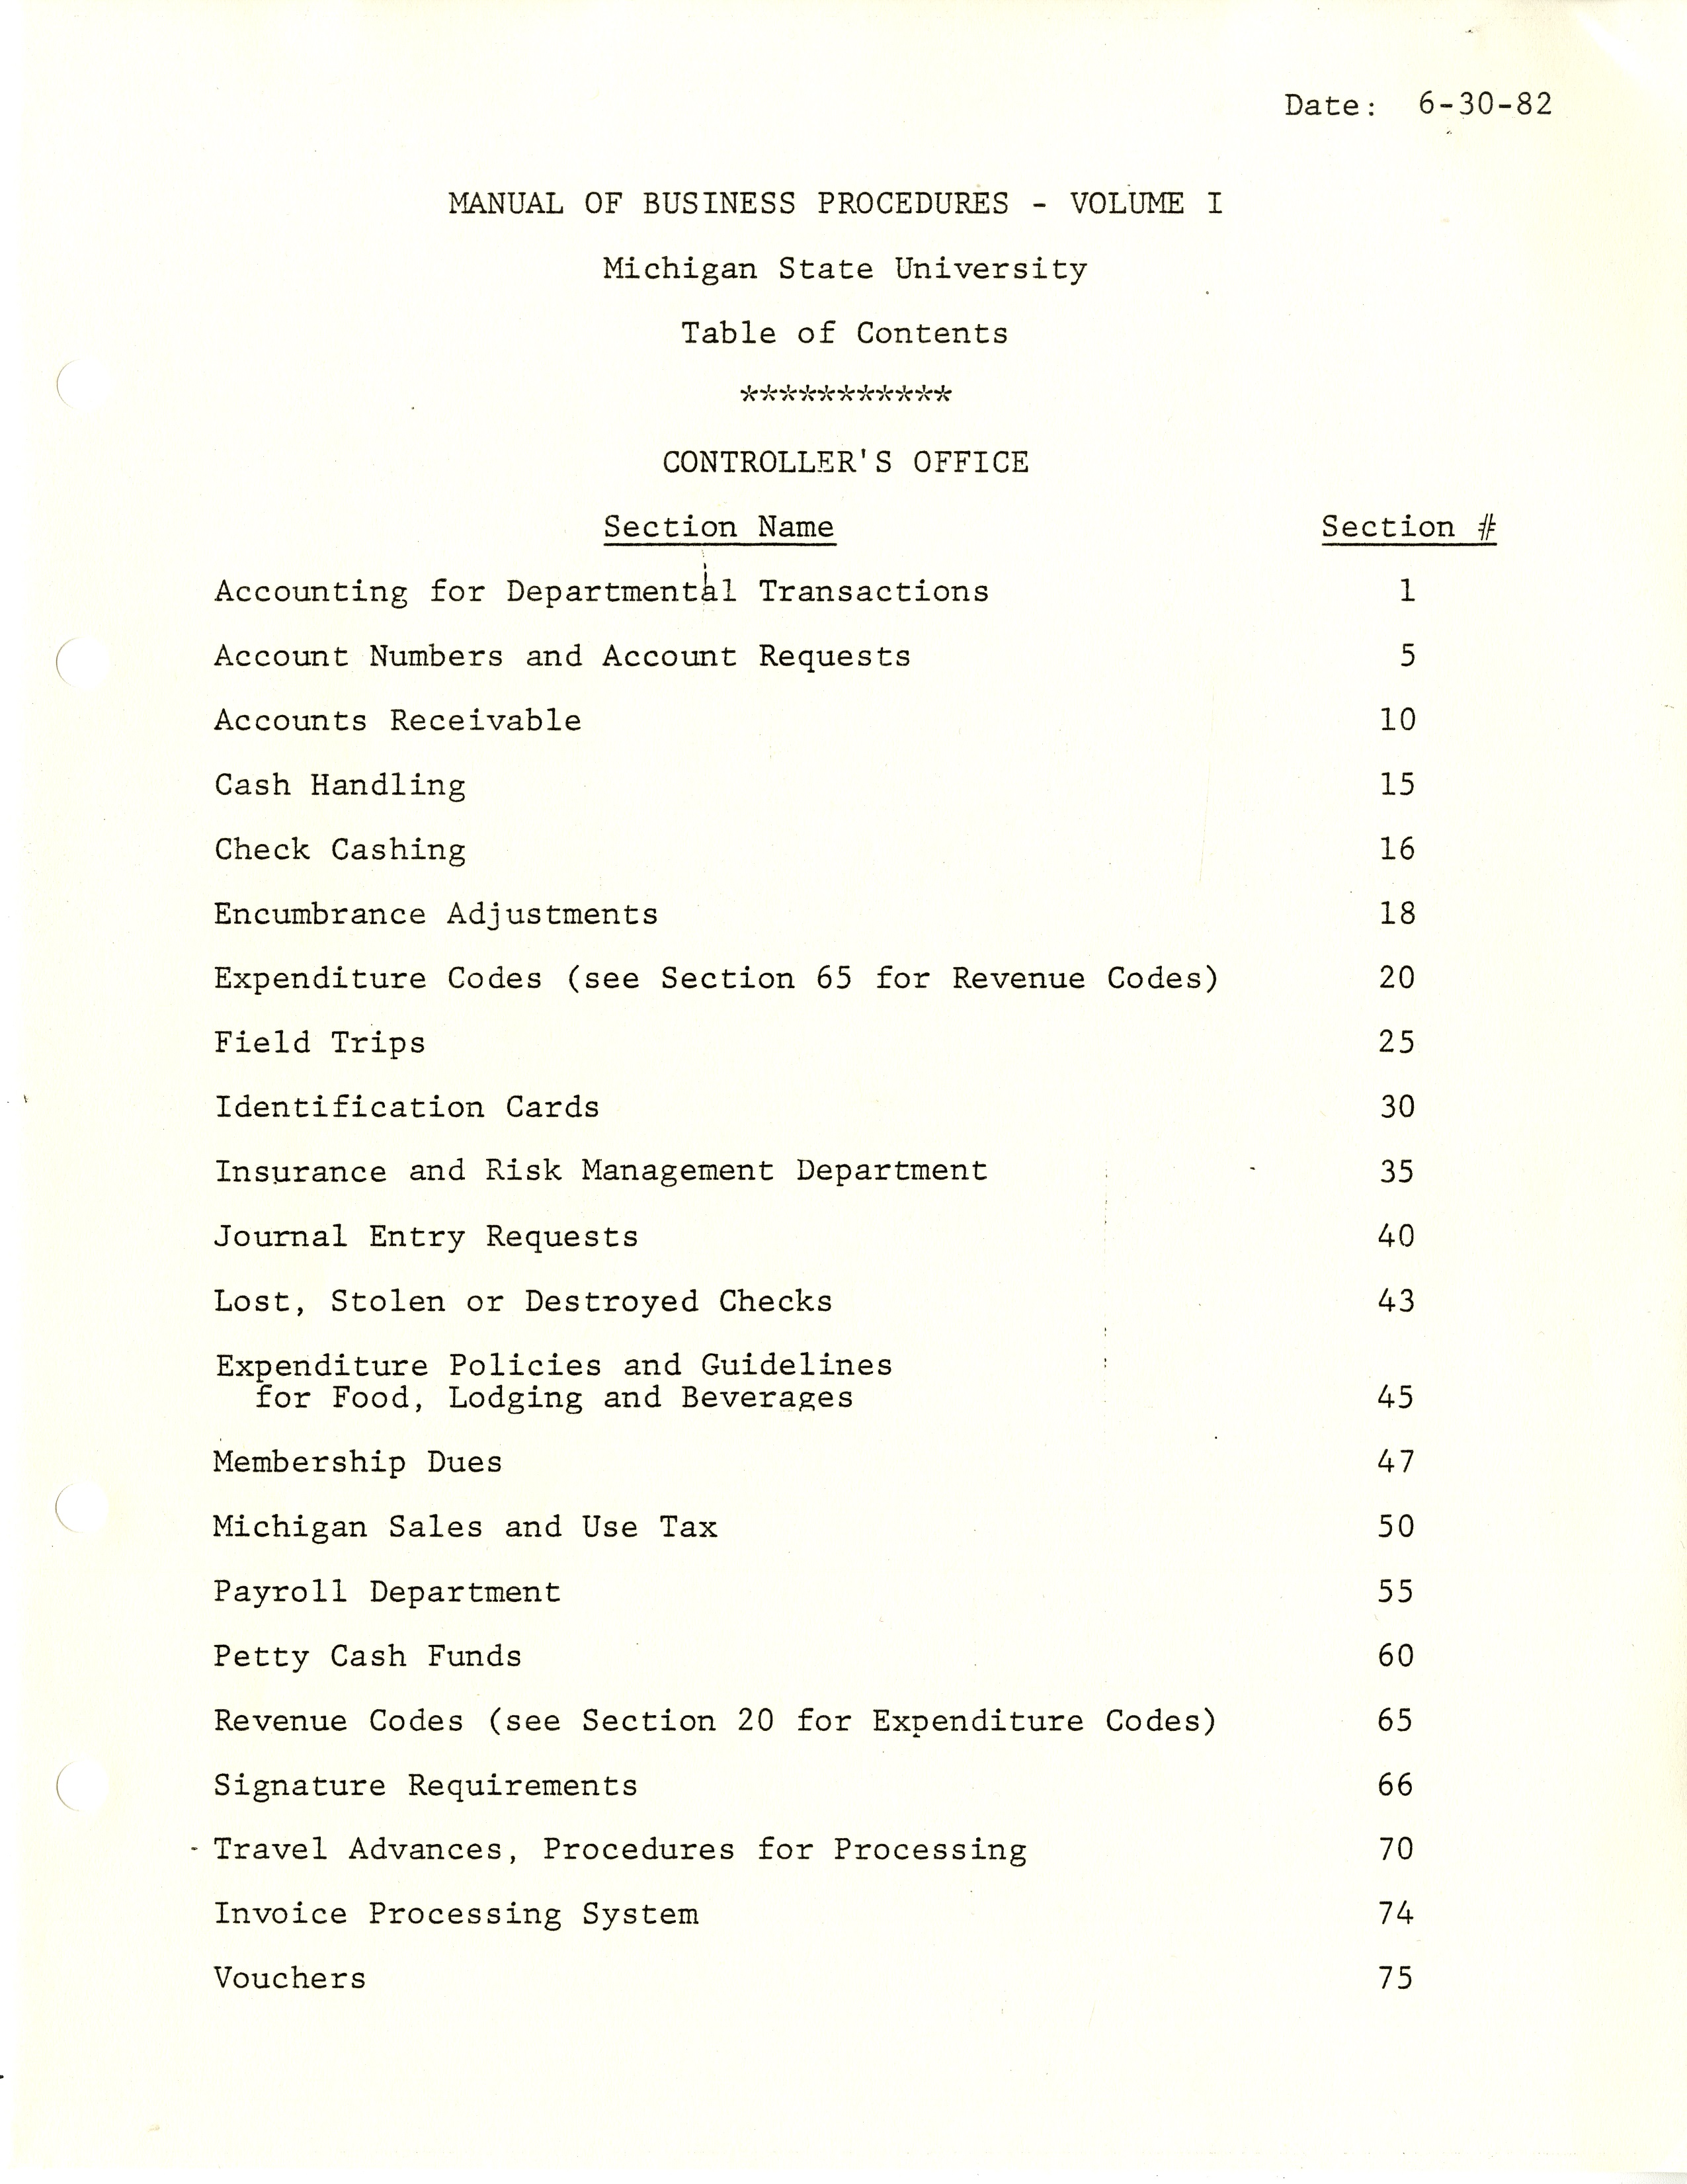 MSU Manual of Business Procedures, 1982